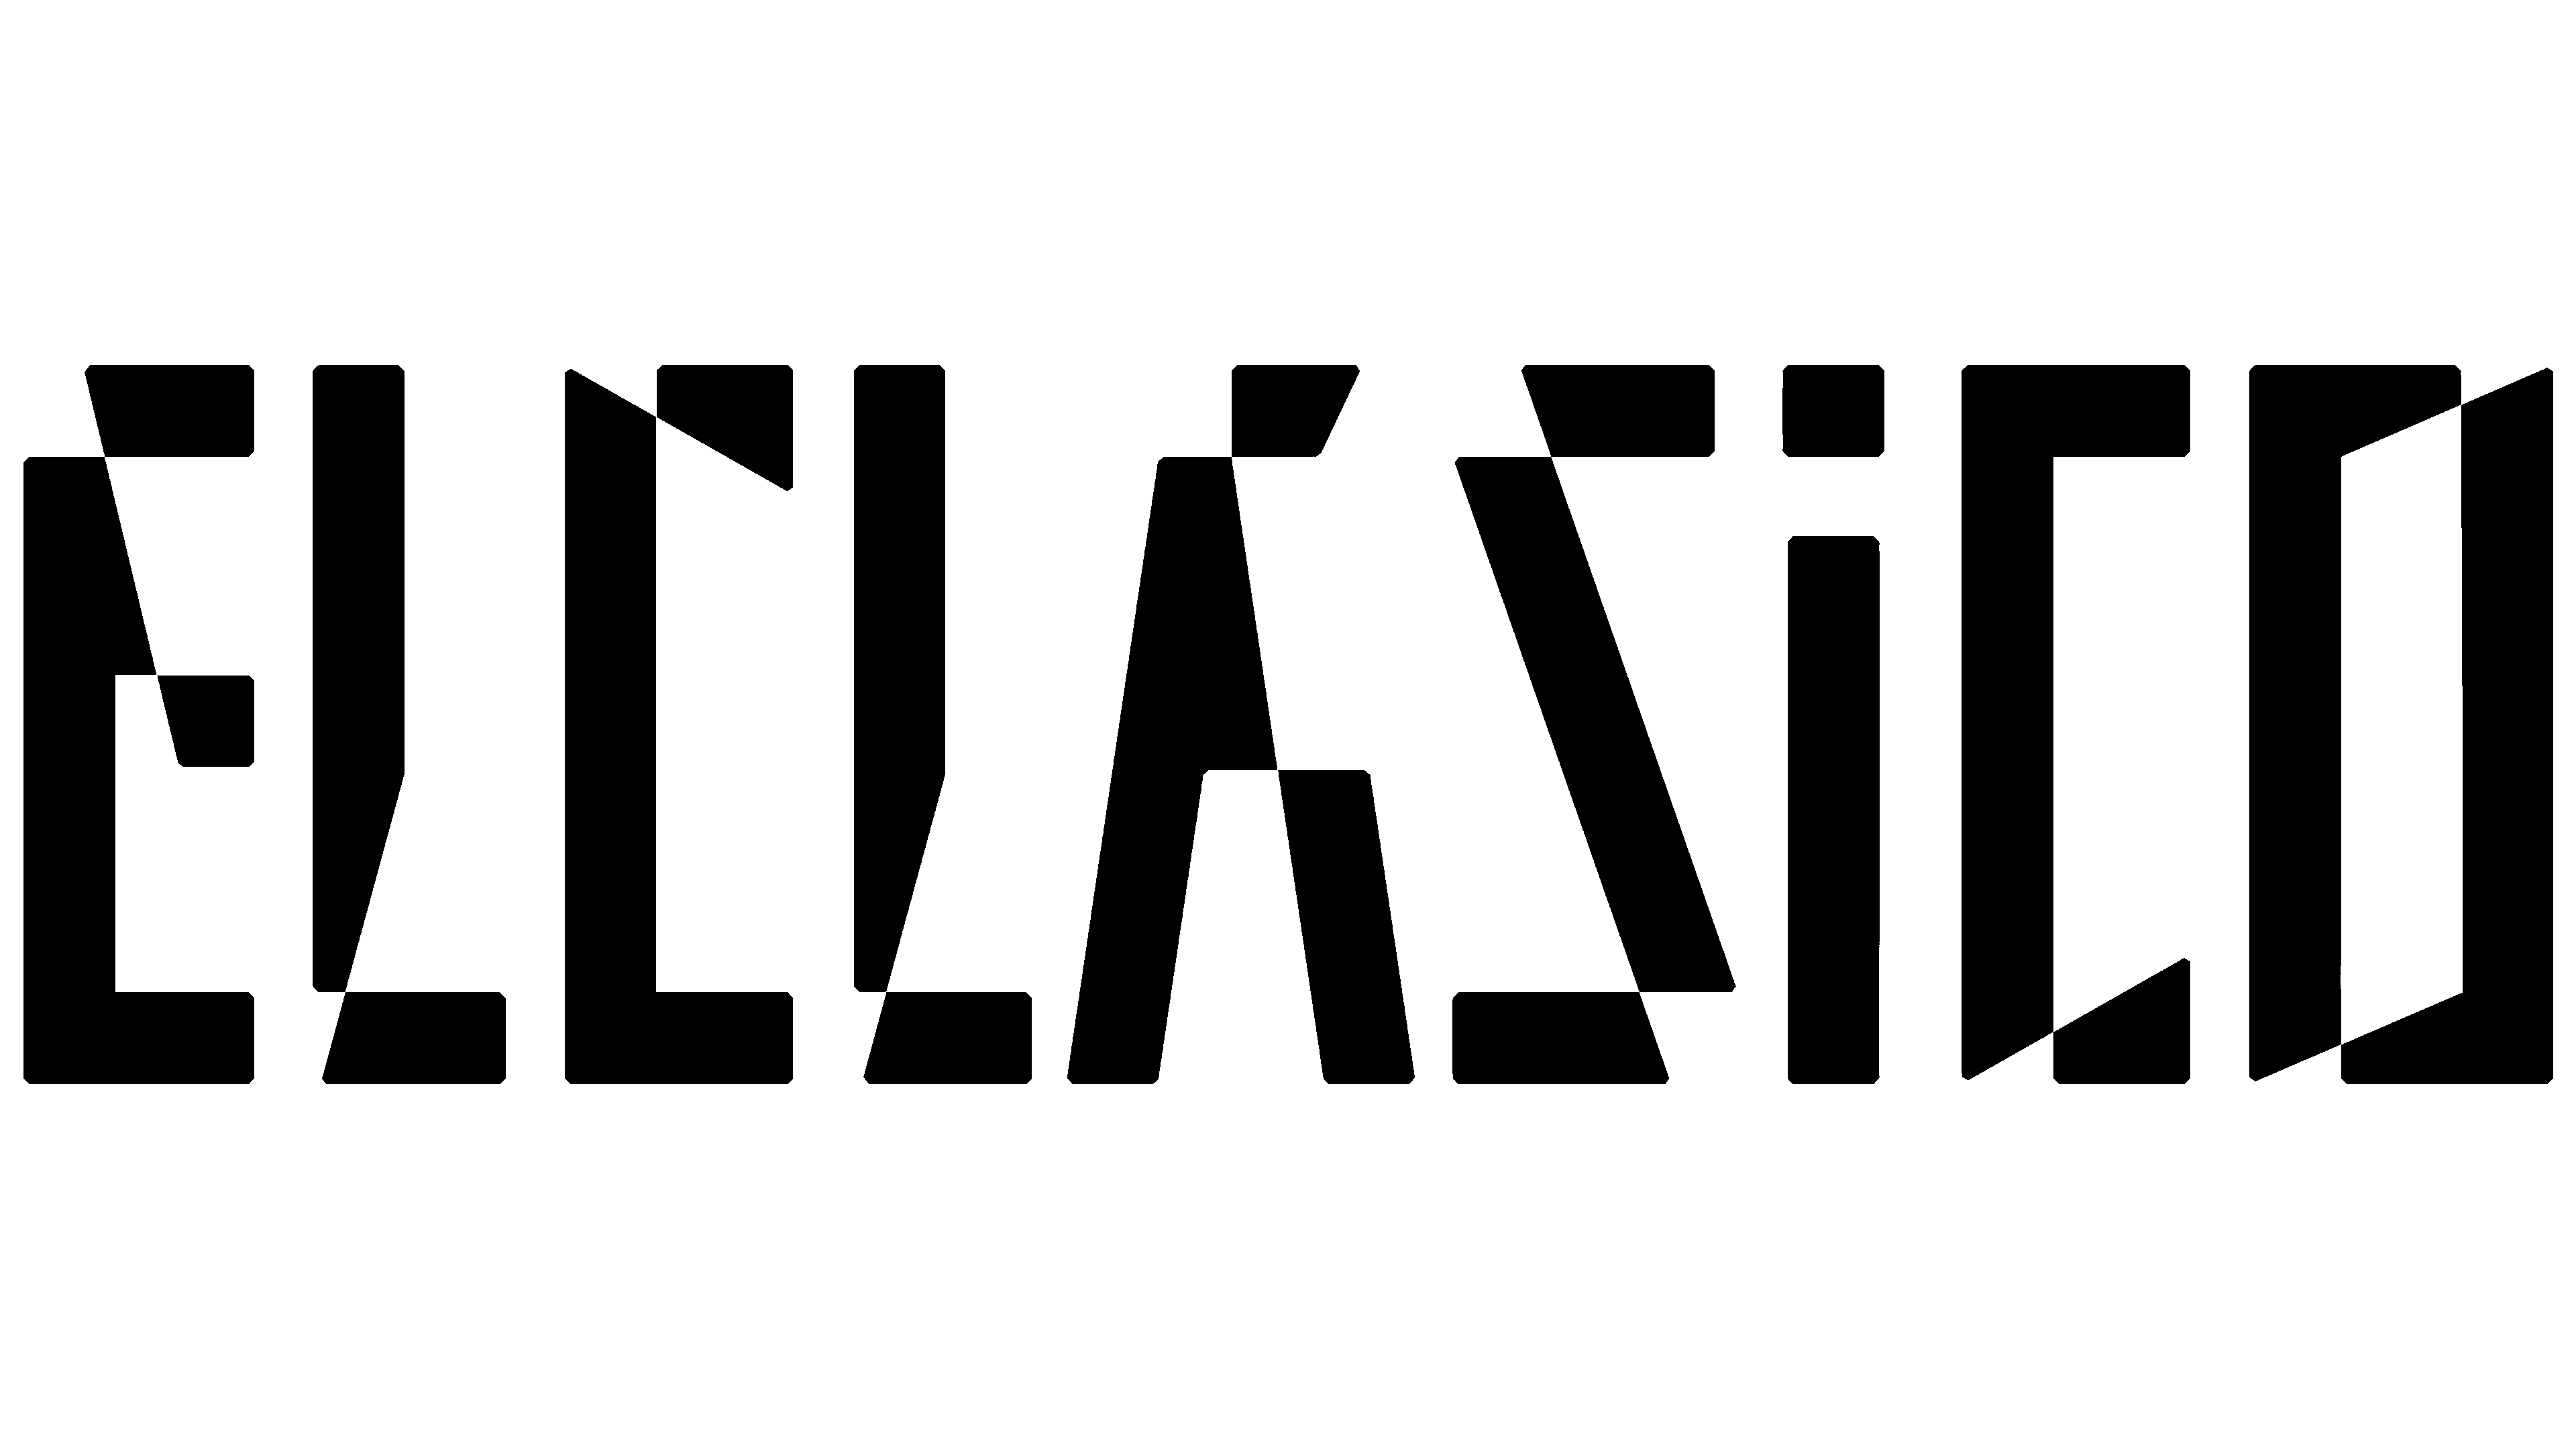 Spanish La Liga unveils new corporate identity The Classic (El Clásico)